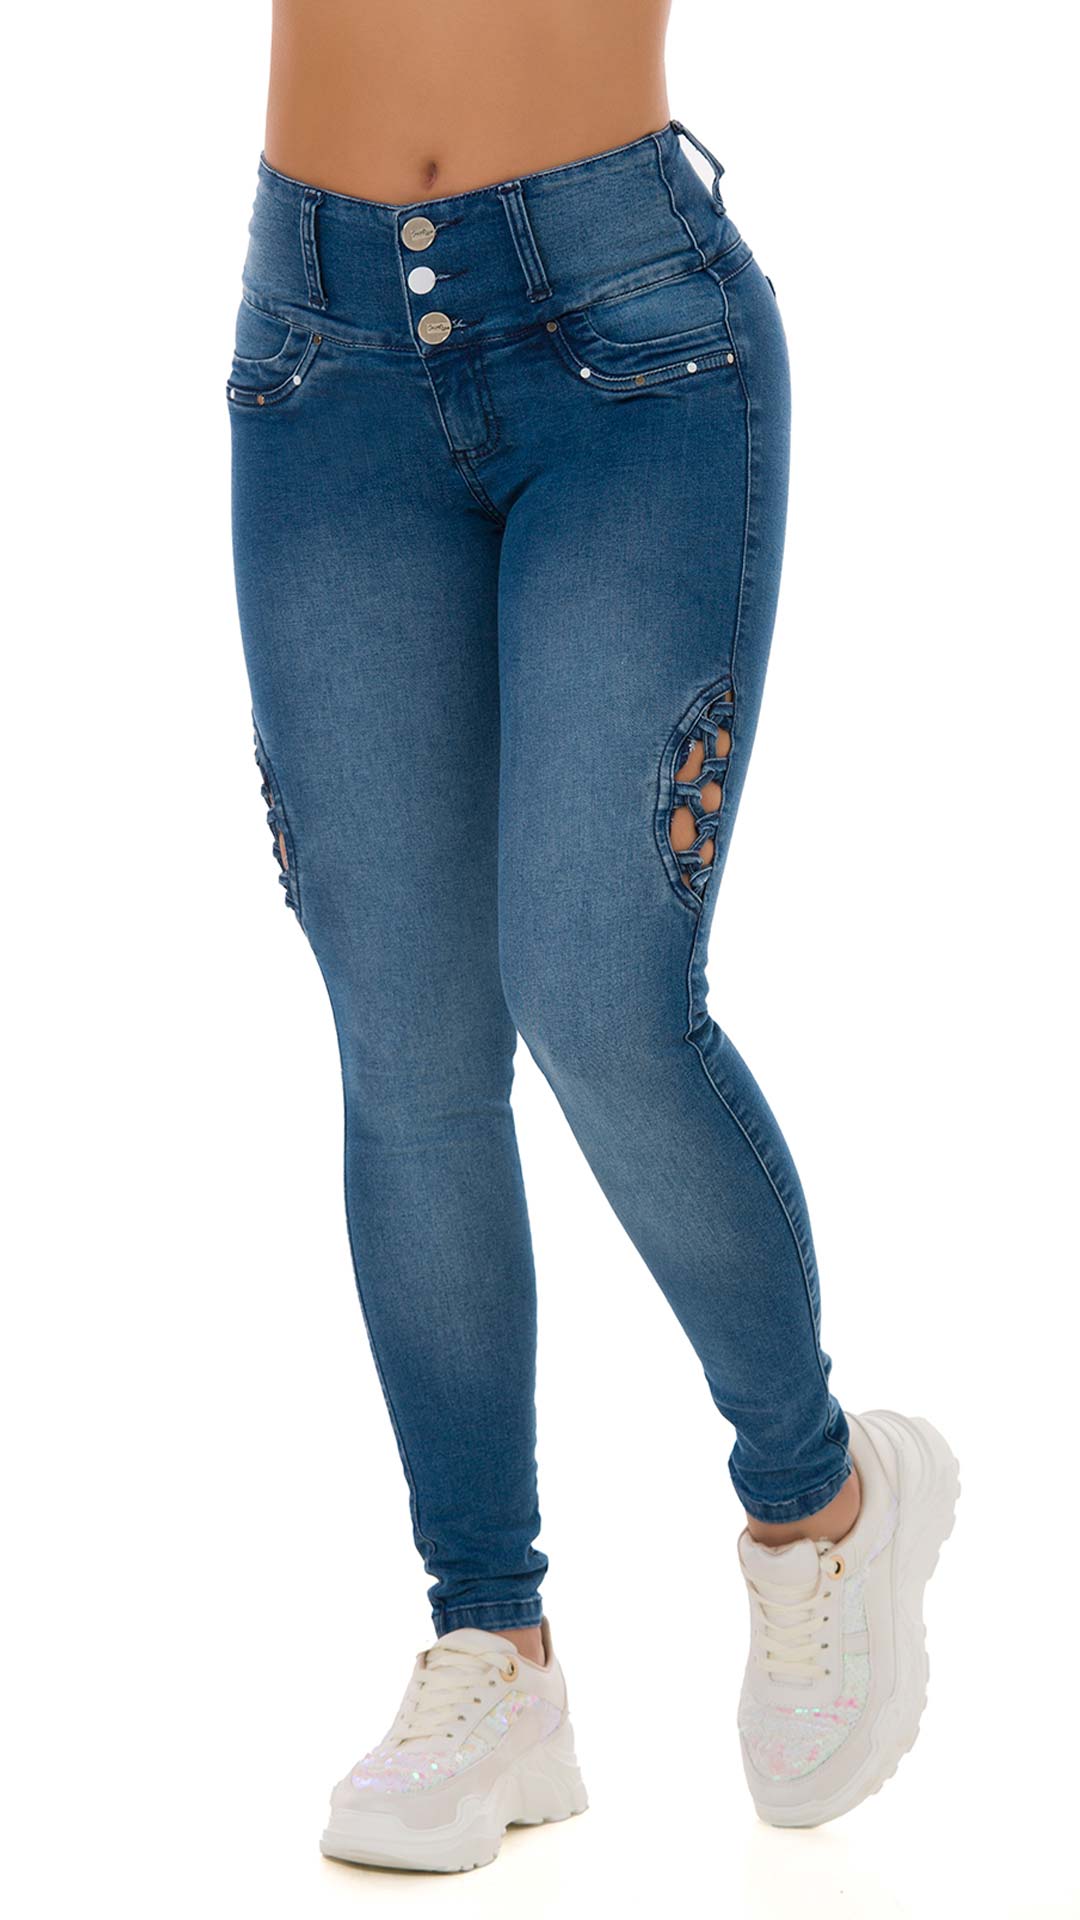 Classic Blue Jeans with Butt Lift Body Shaper - Butt Enhancing Denim Jeans